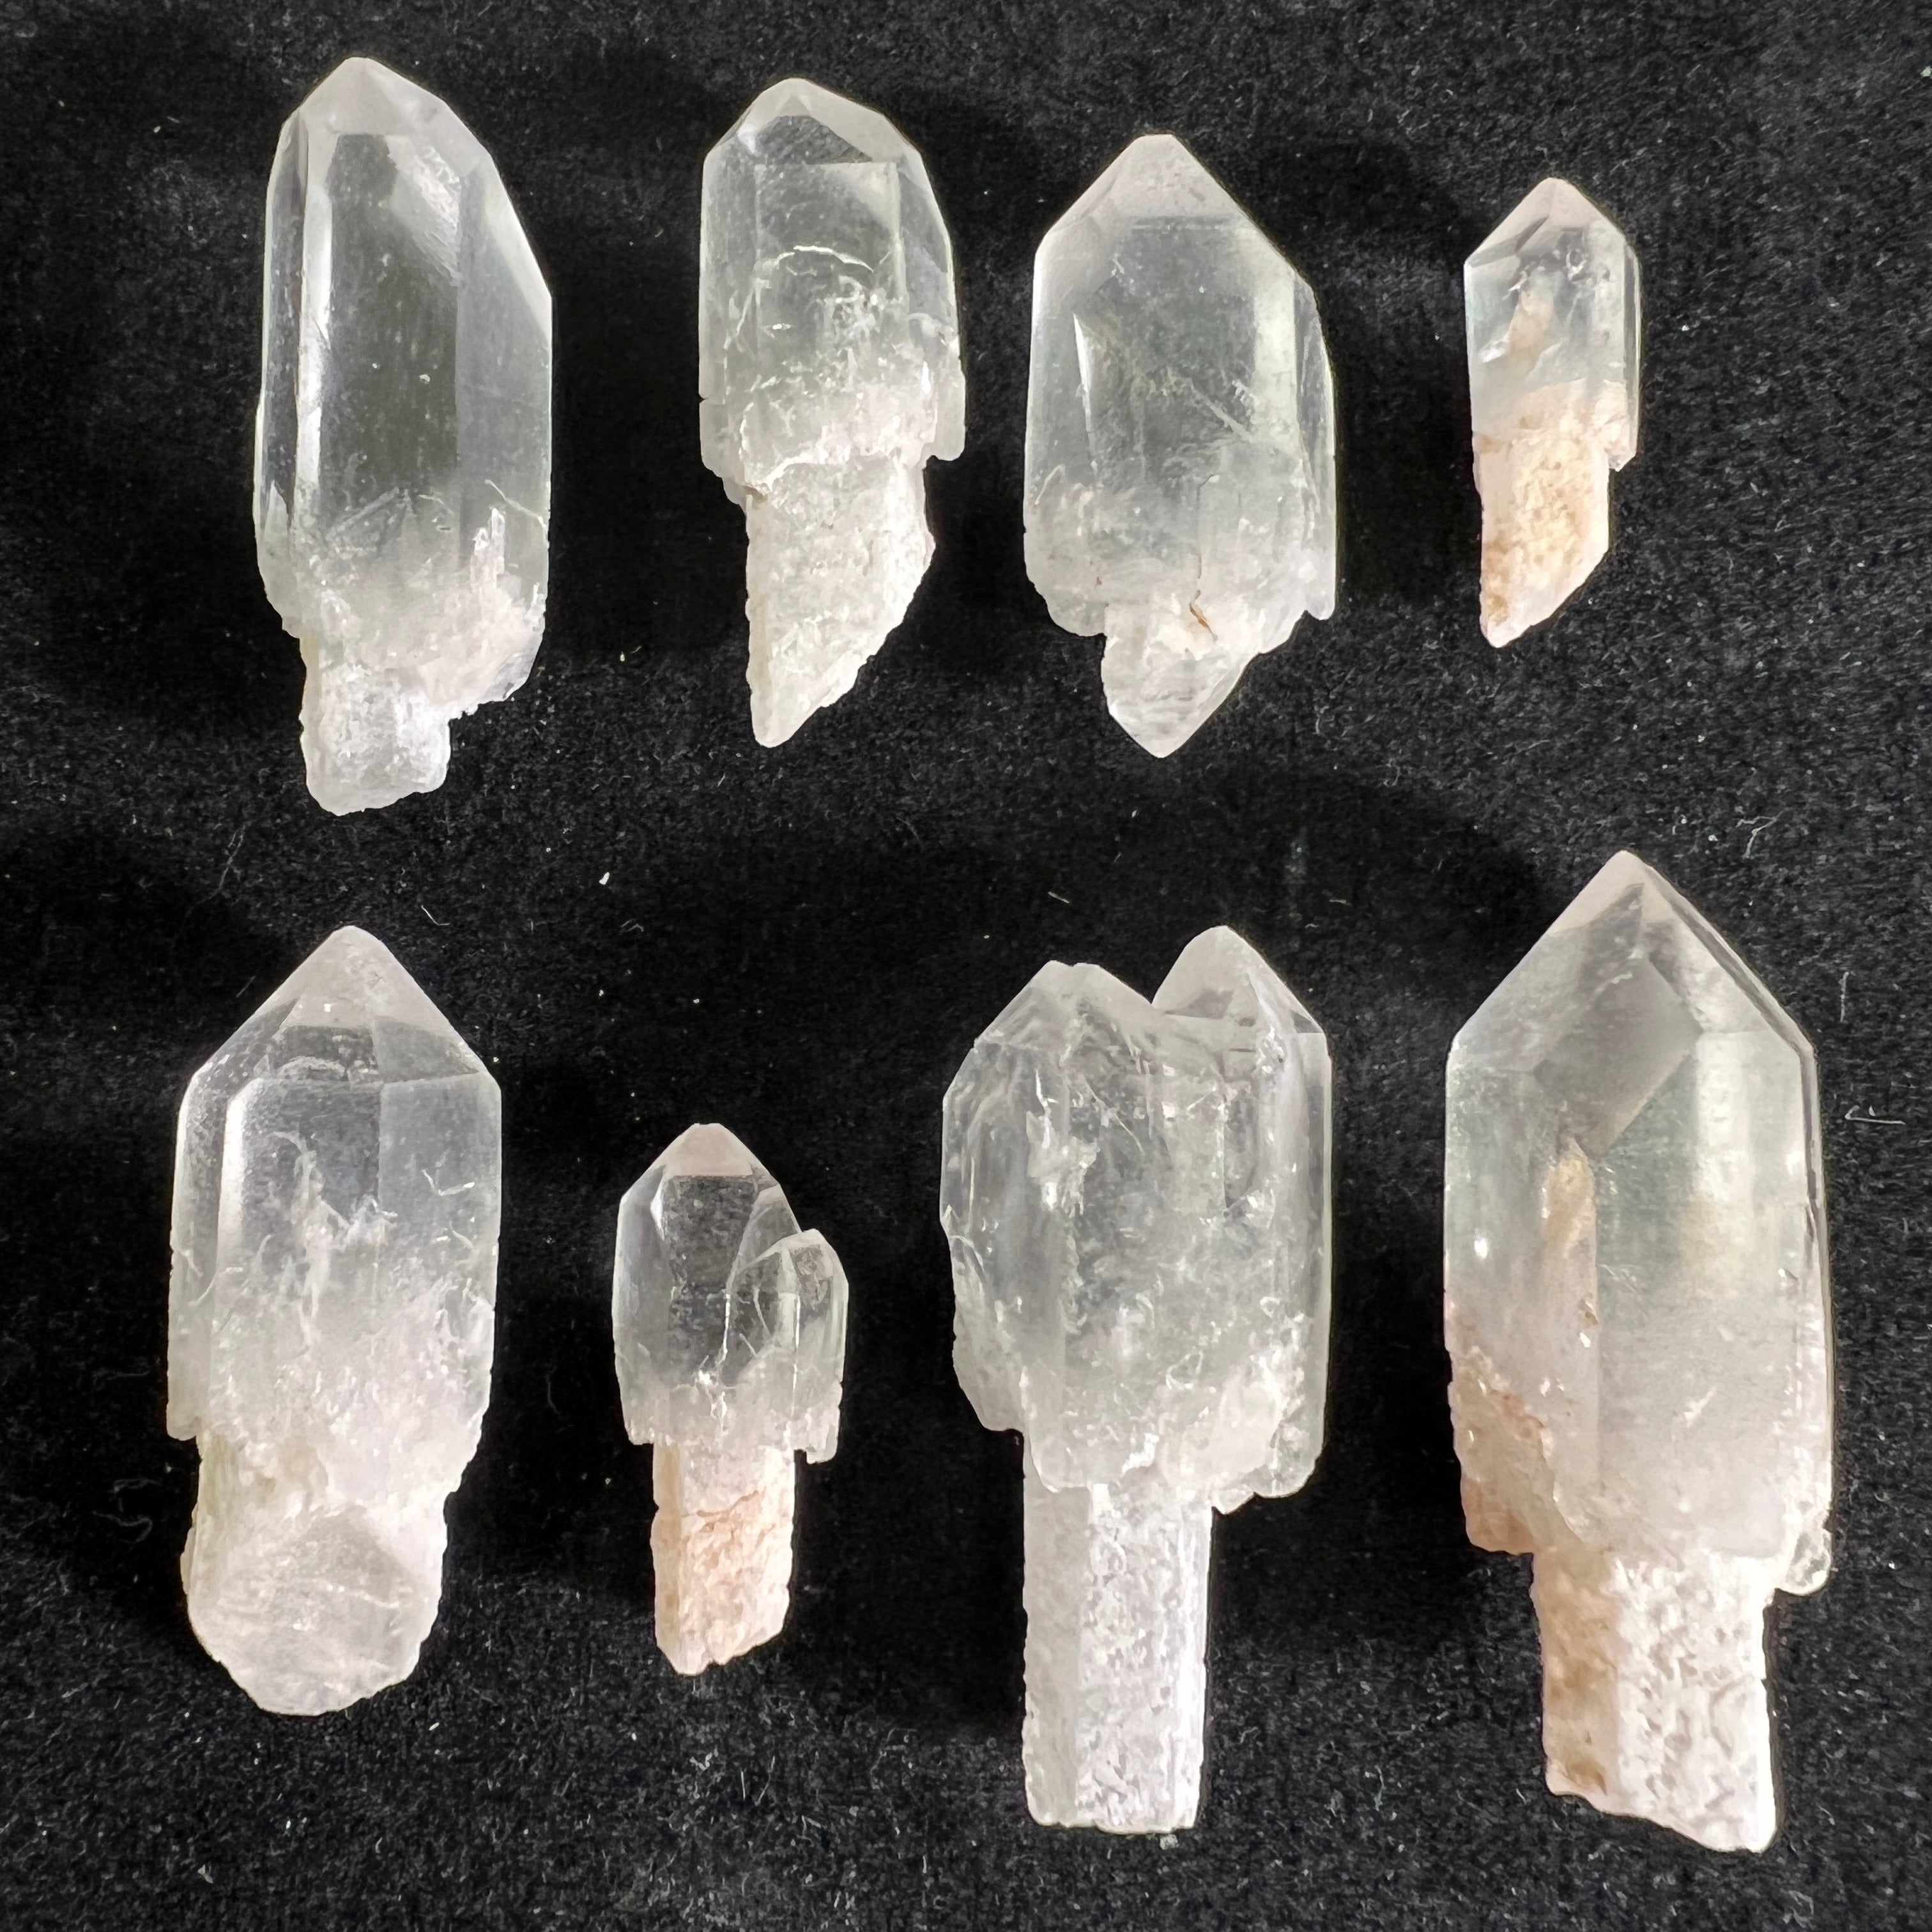 Quartz Scepter Crystals, Kit of 8